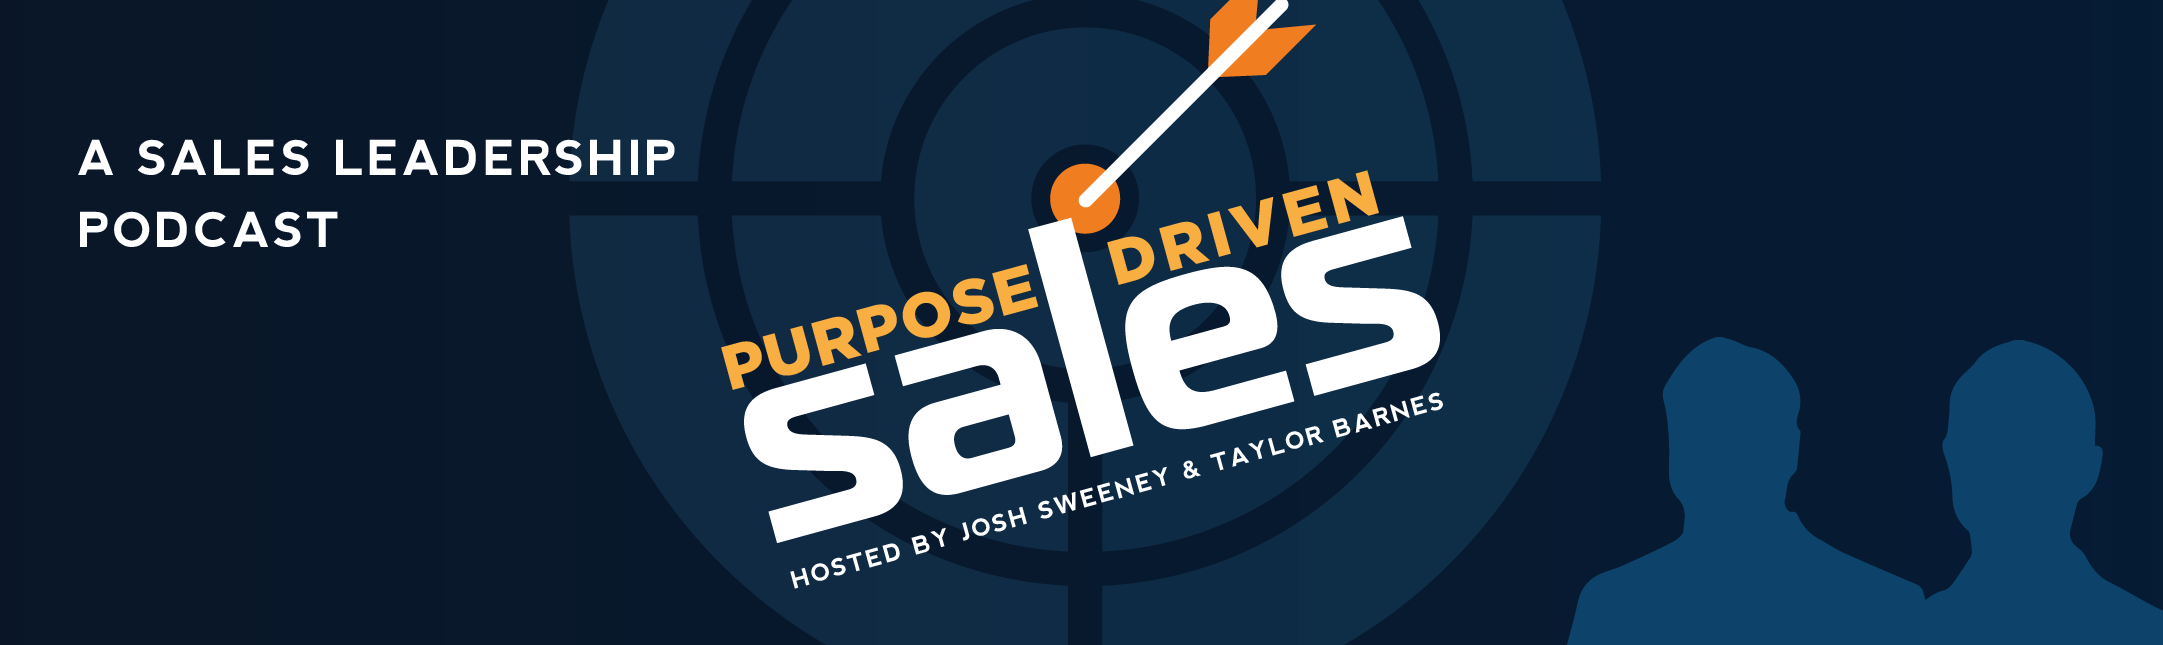 purpose driven sales leadership podcast